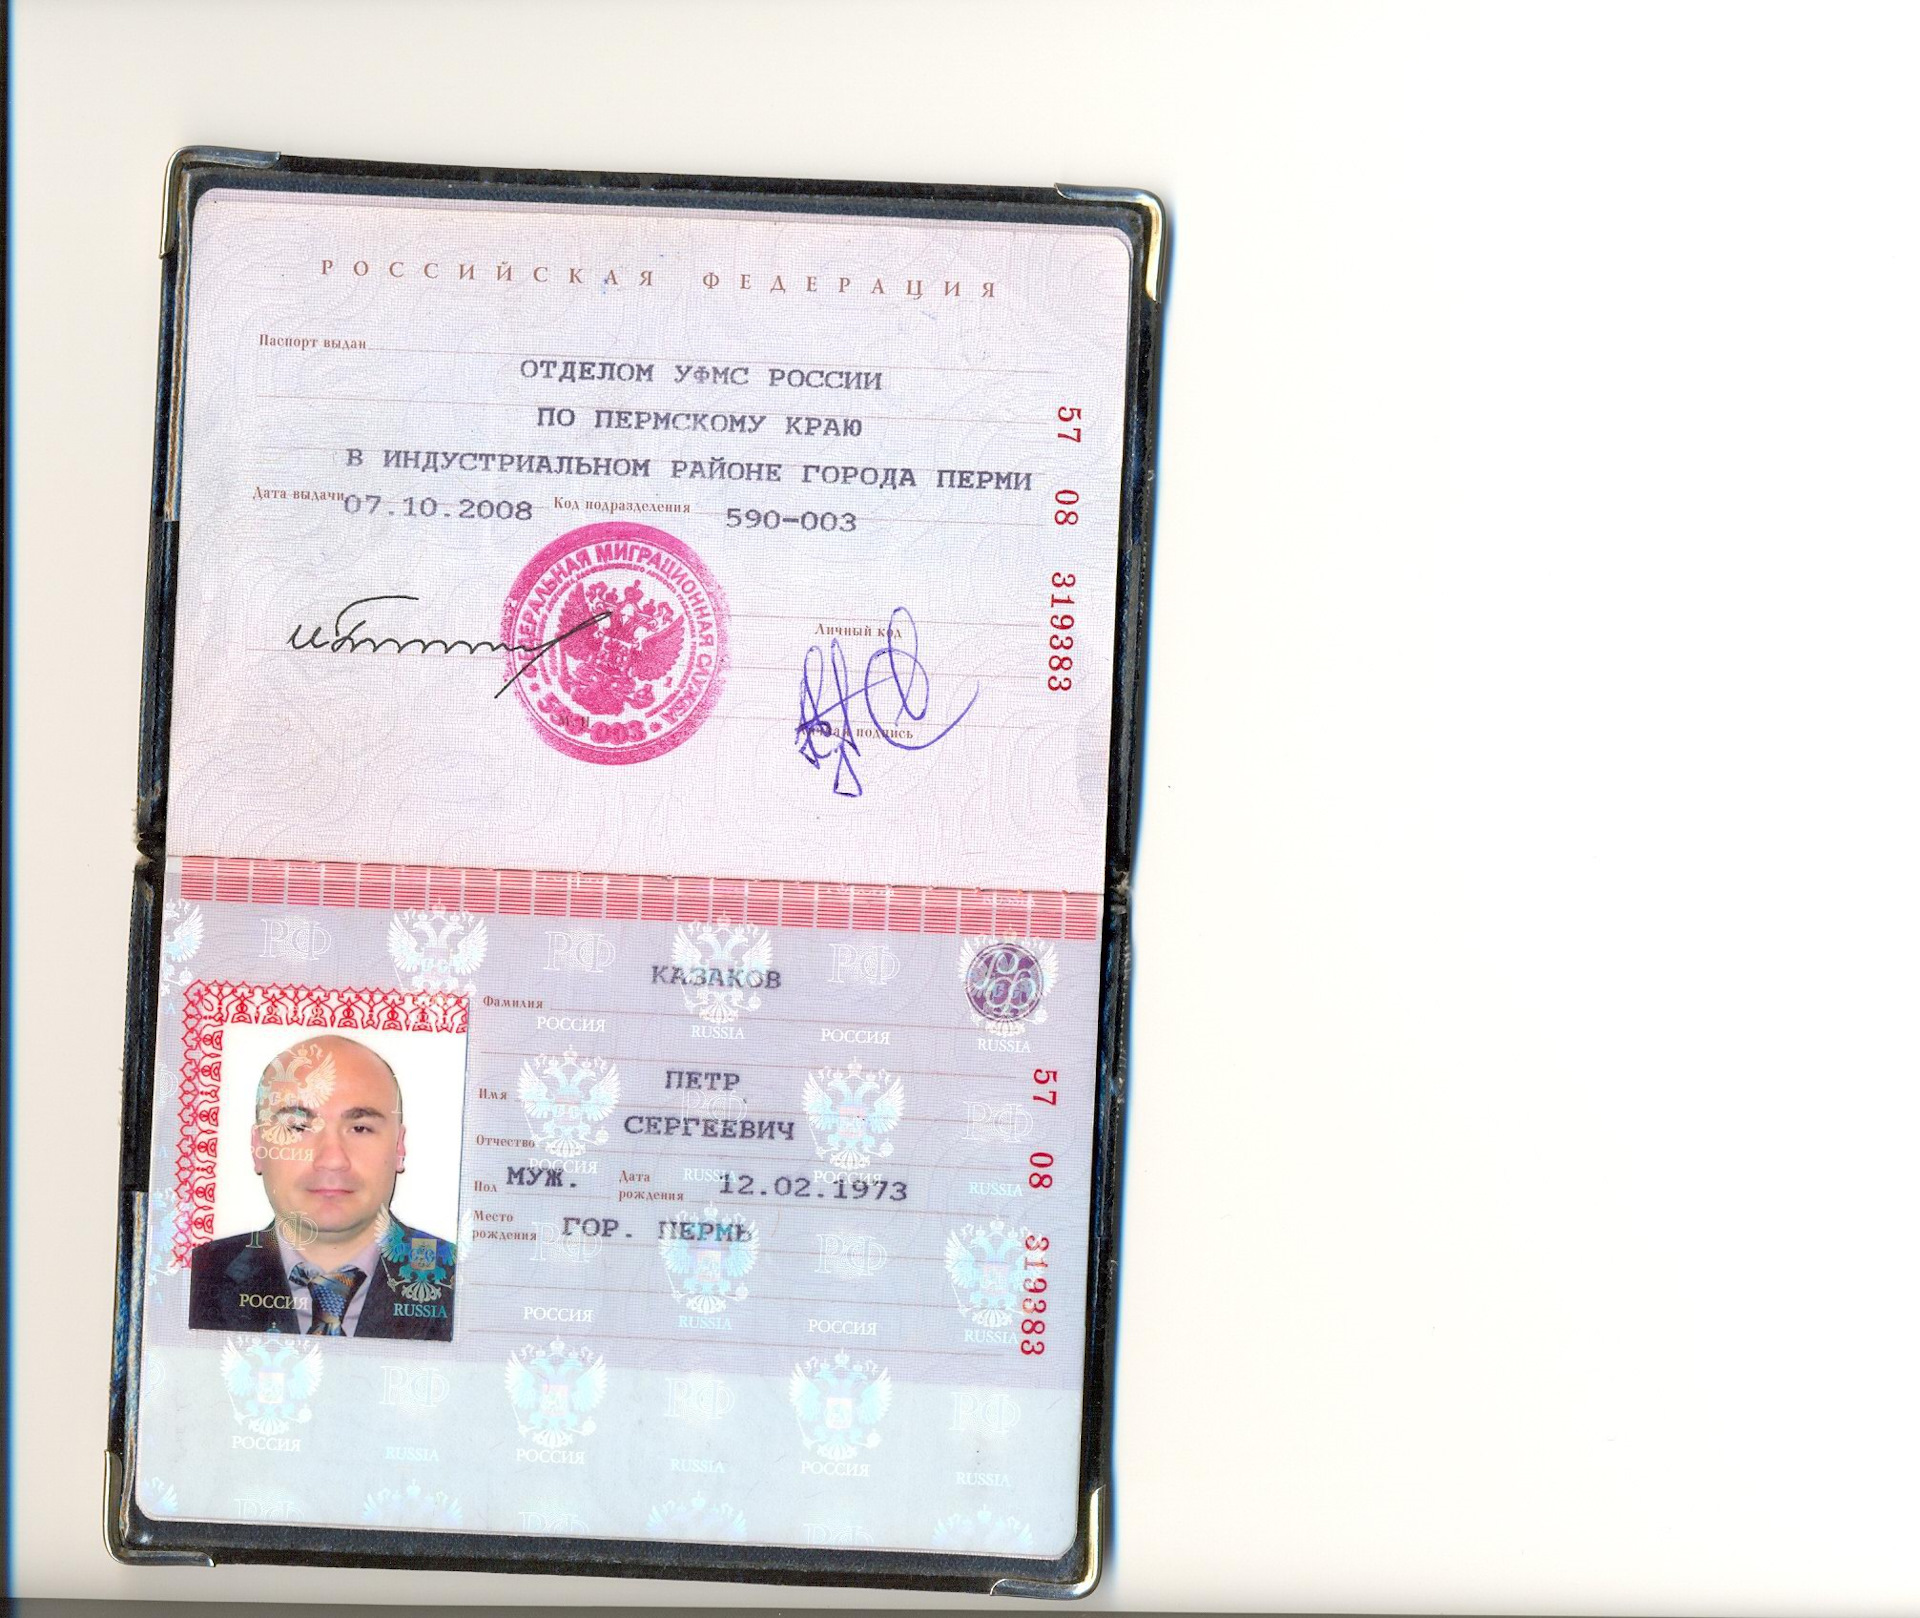 Пример фото паспорта в развороте